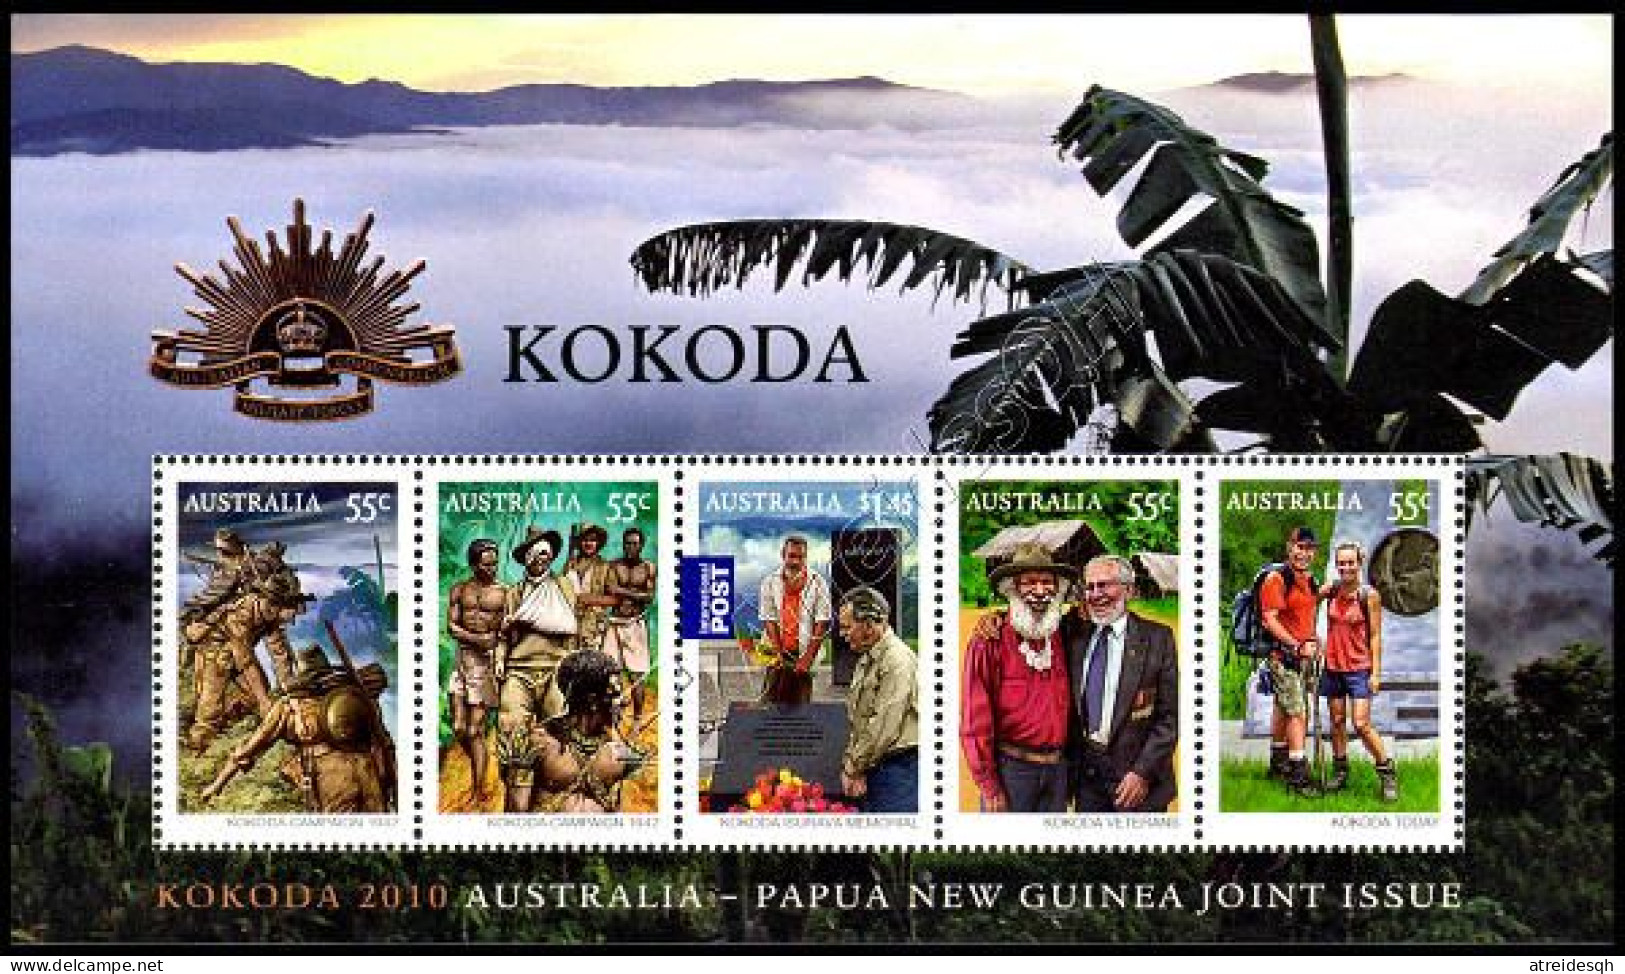 [Q] Australia 2010: Foglietto Kokoda (congiunta Papua Nuova Guinea) / Kokoda S/S (joint Issue With Papua New Guinea) ** - Emissions Communes